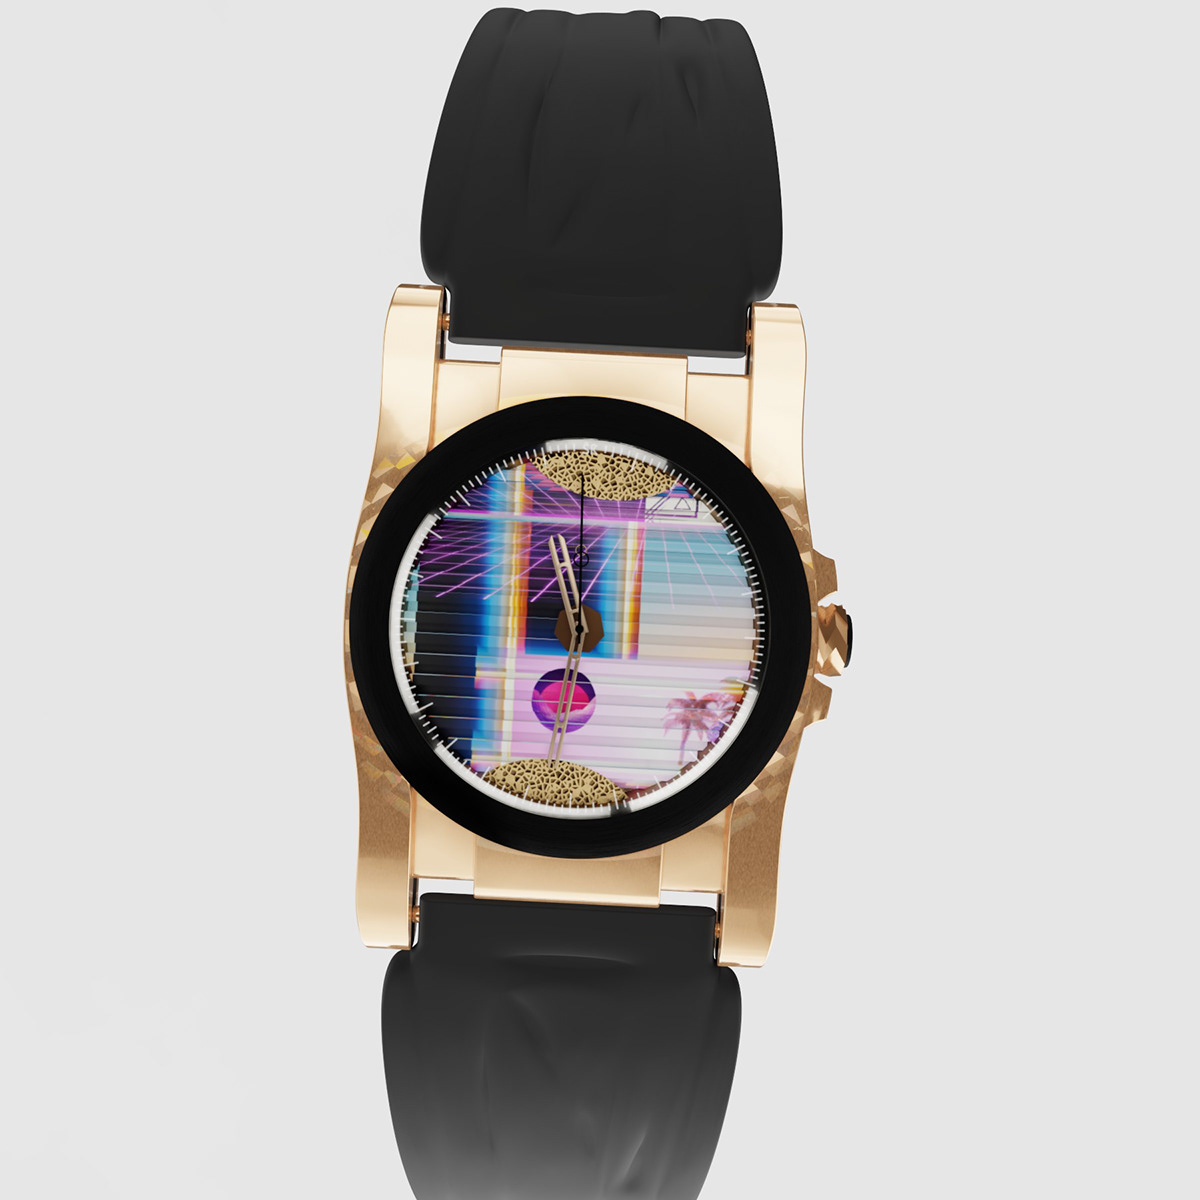 clock design swiss krasowski clock face Roll industrial design  luxury product Watches watches design